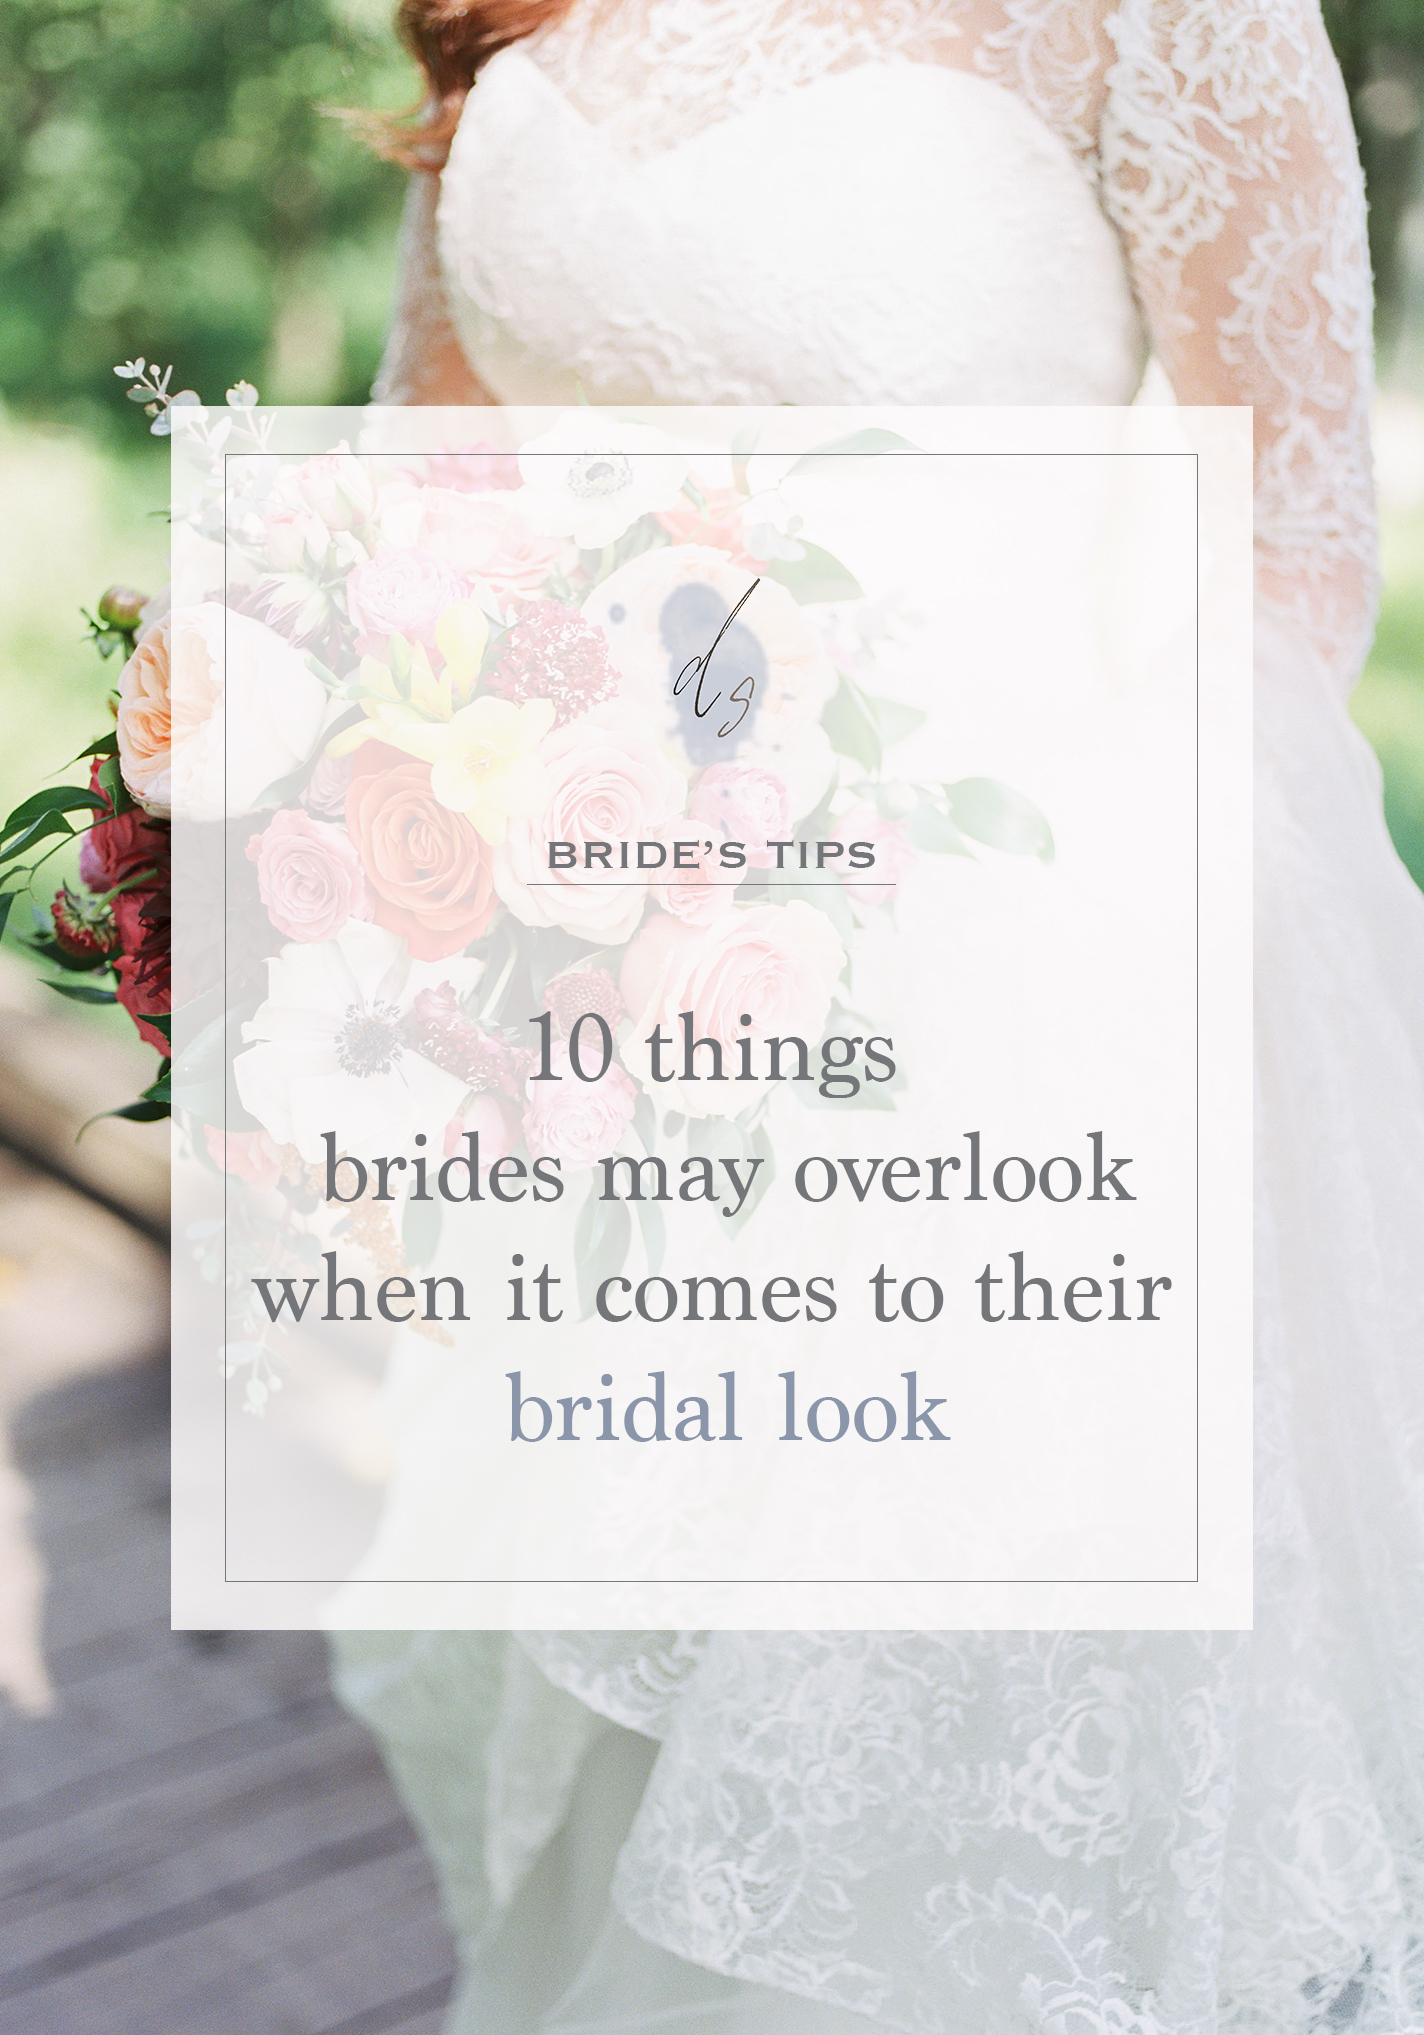 bride's tips, bridal look, wedding style, wedding planning, du soleil photographie, philadelphia wedding photographer